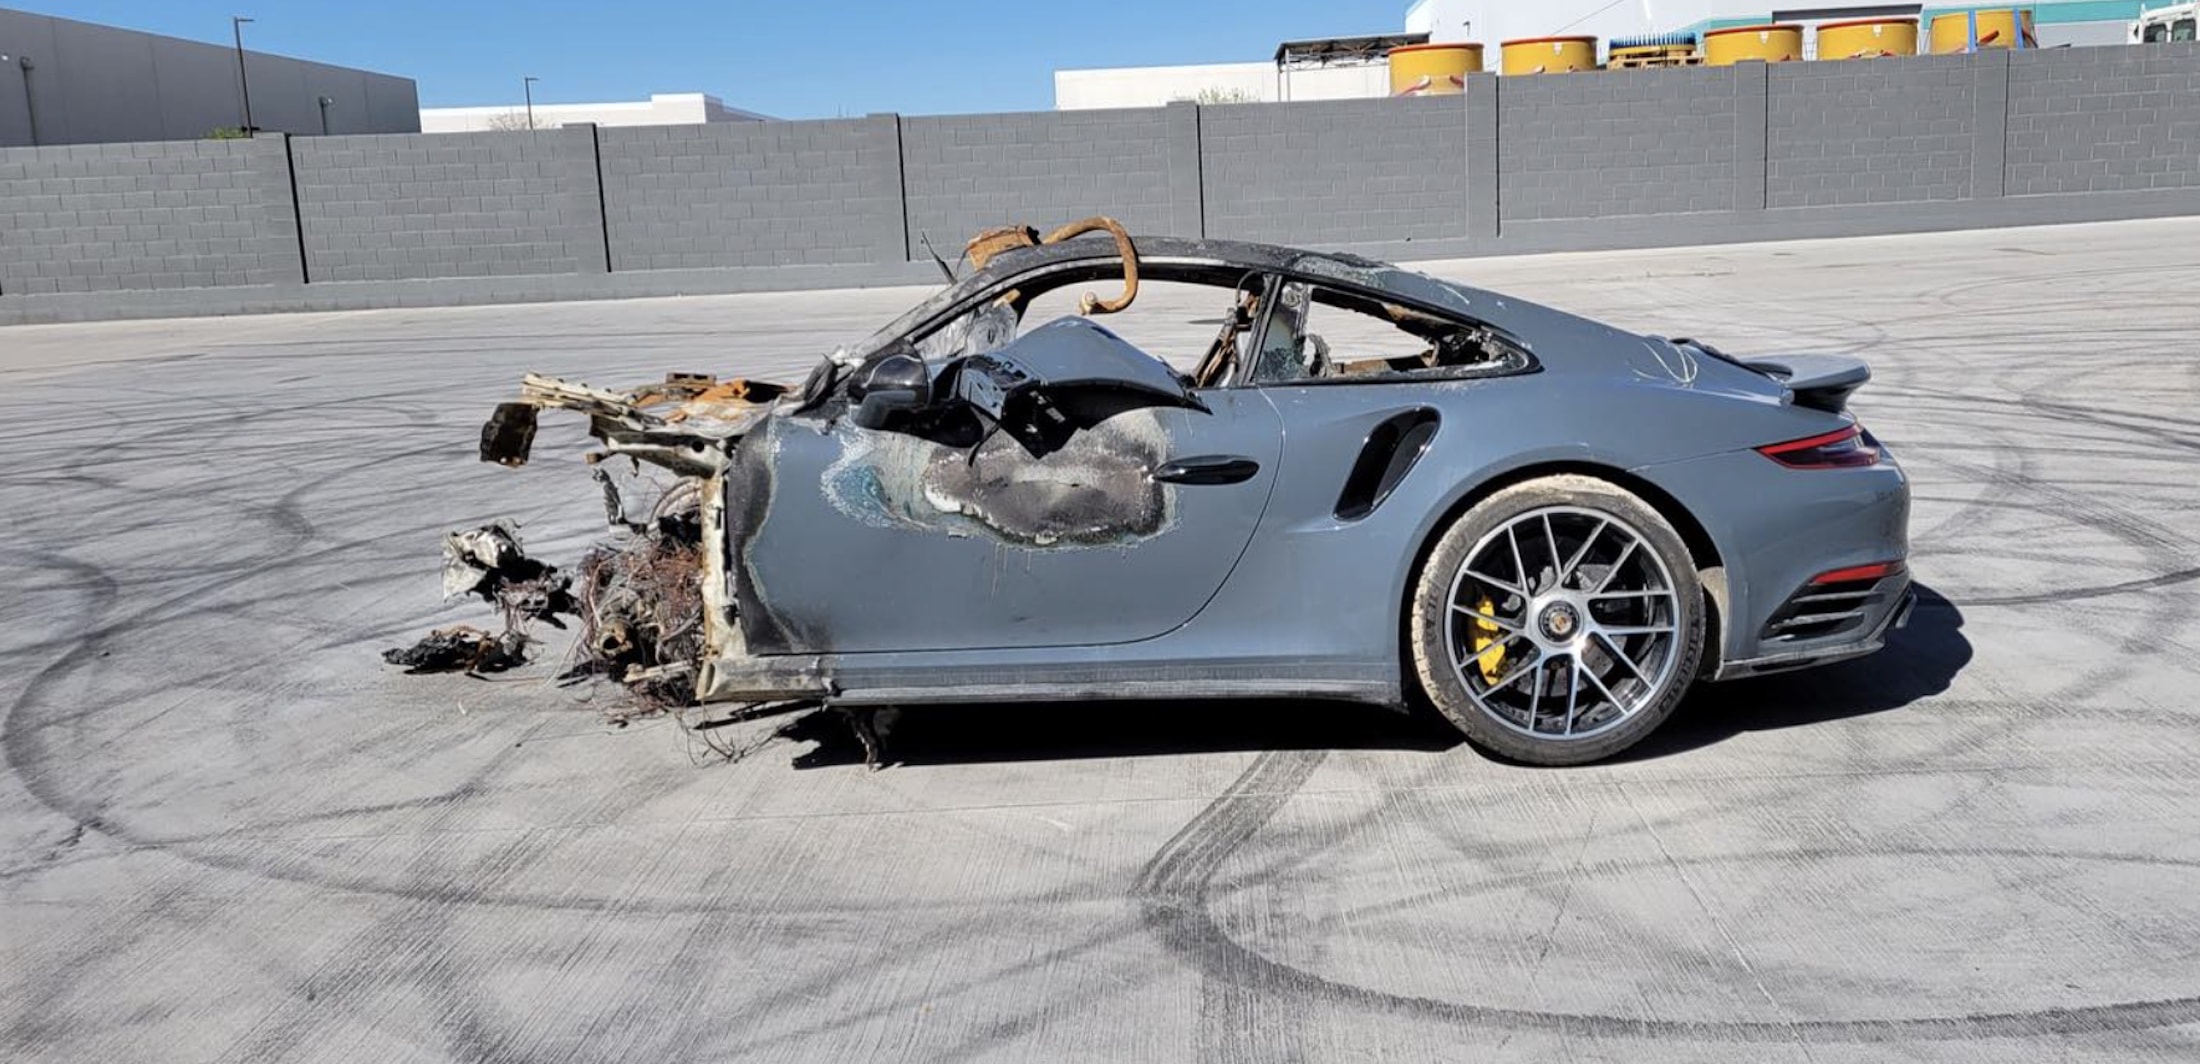 Porsche 911 Turbo S eBay Sale Salvage Story Revealed